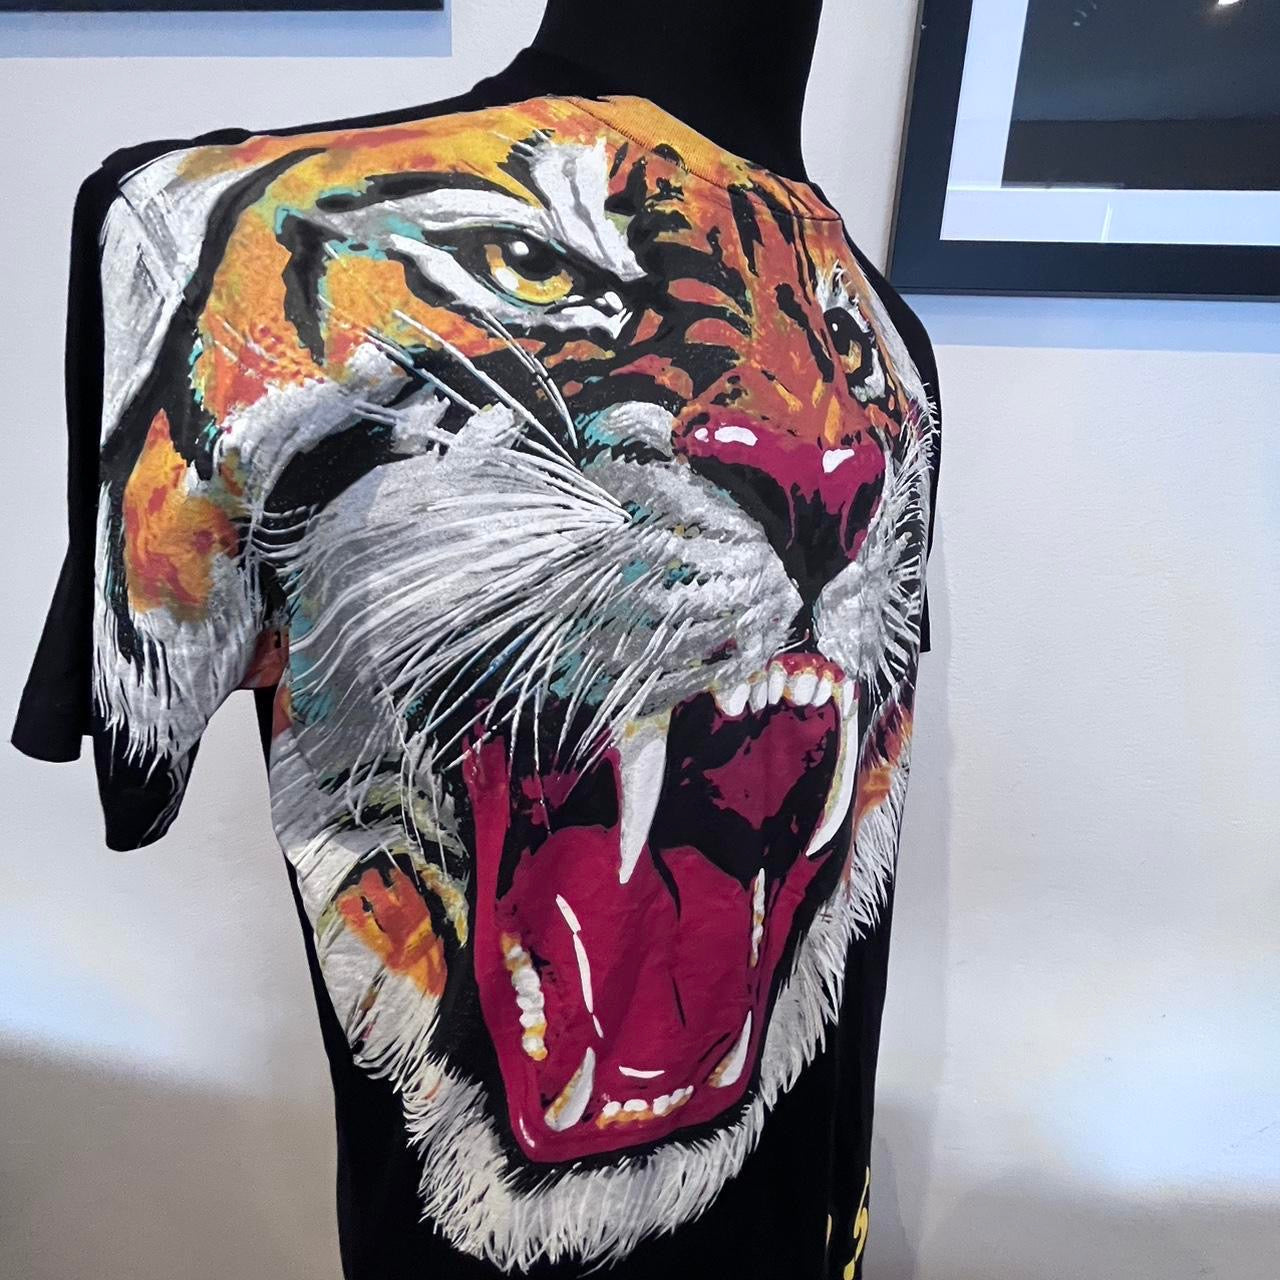 Dsquared2 100% Cotton Black Logo Tiger Print T-Shirt Size XL